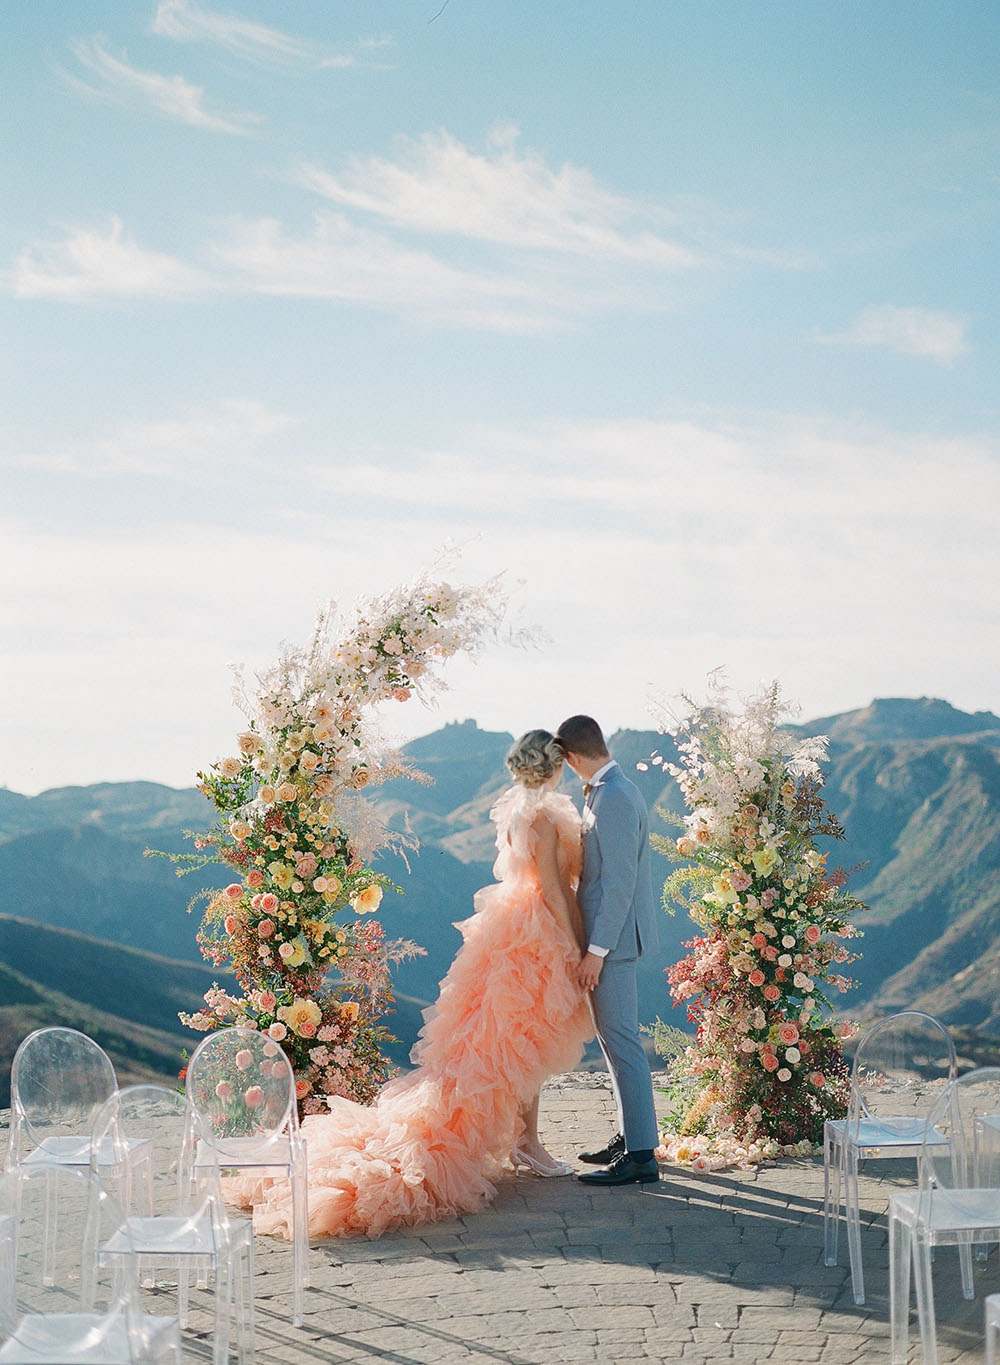 coral wedding dress